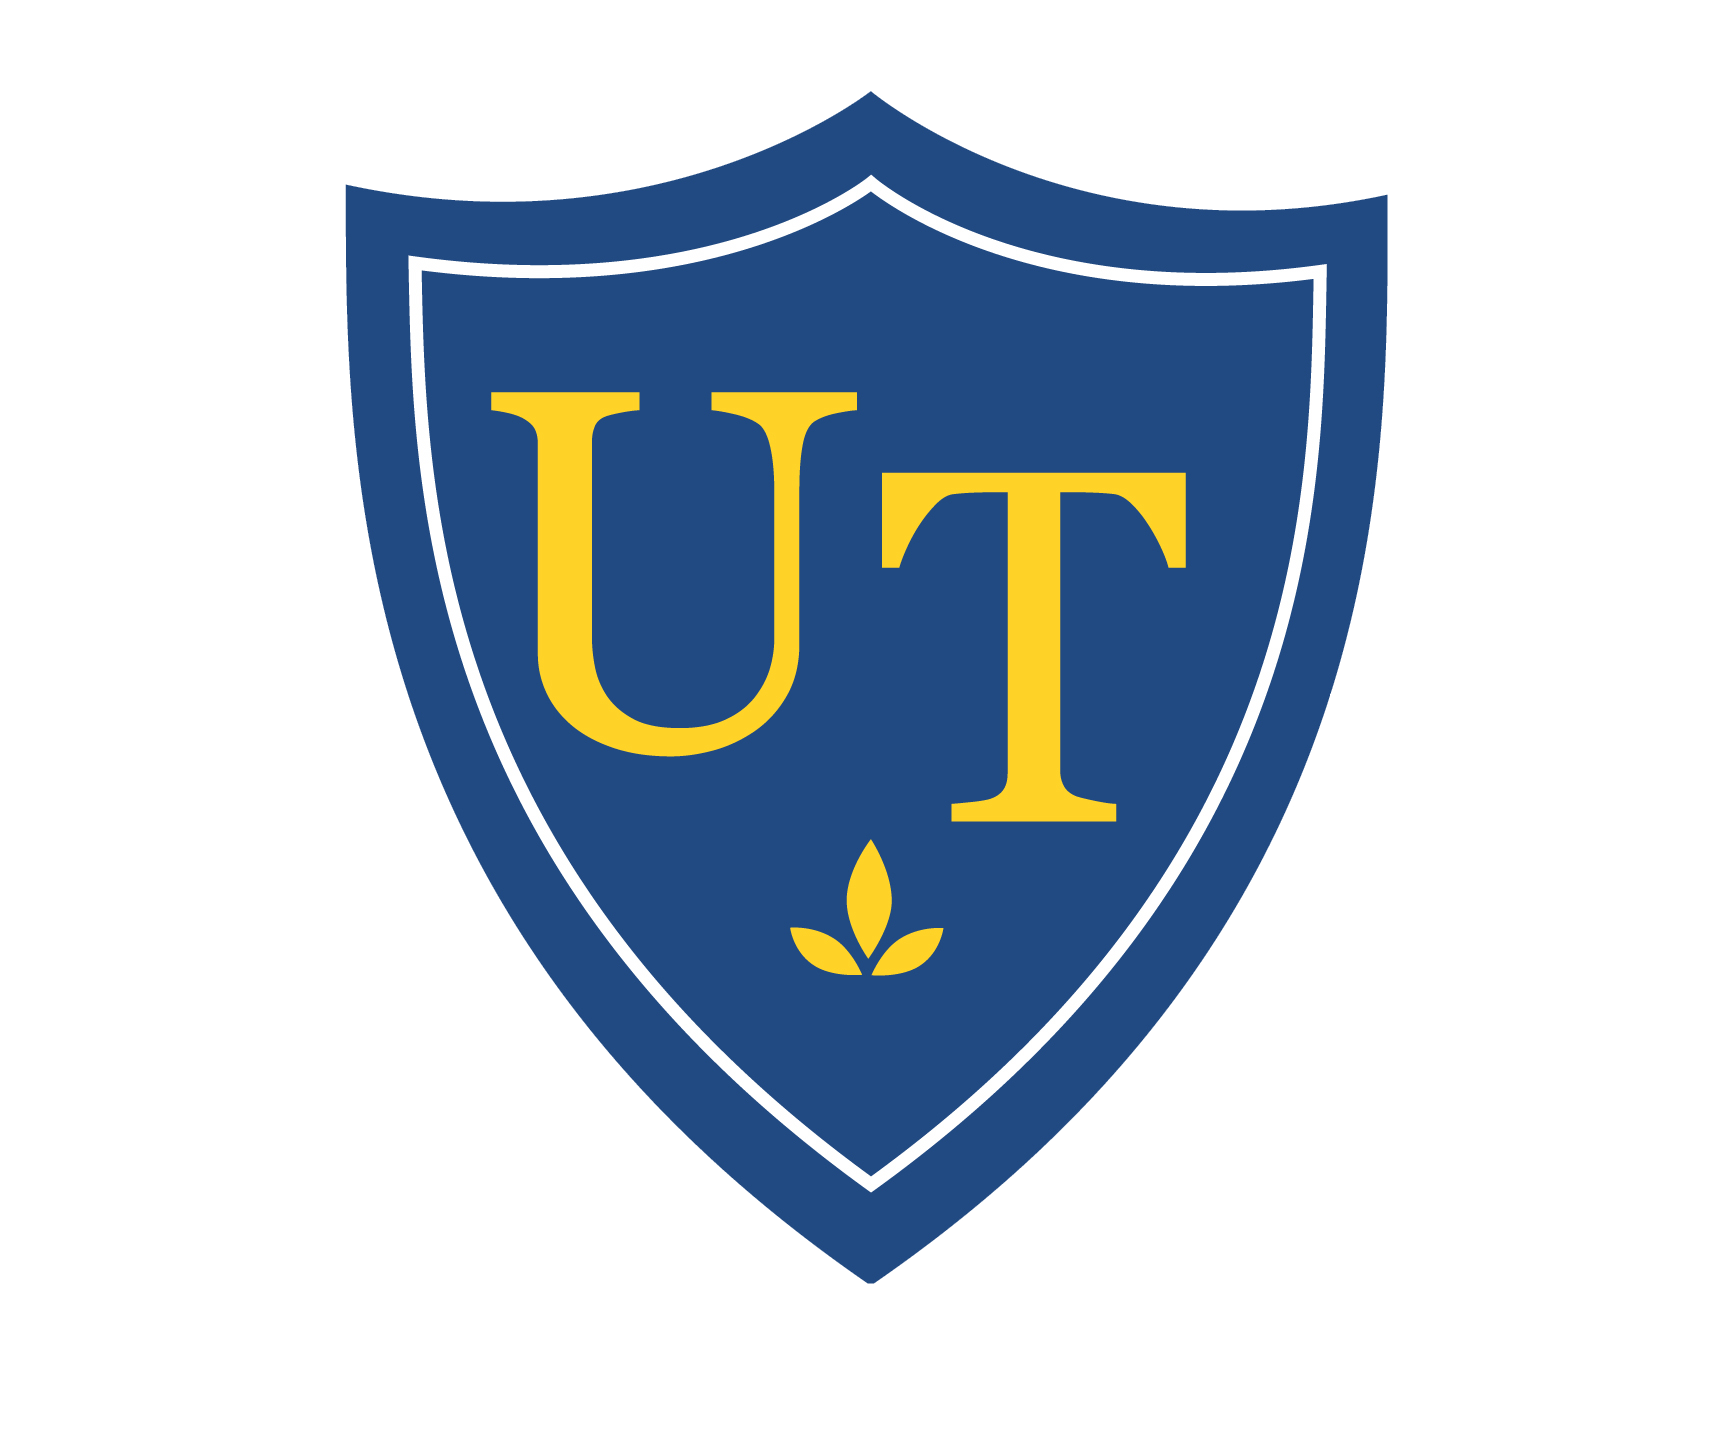 UT Logo - UT seeks media relations specialist